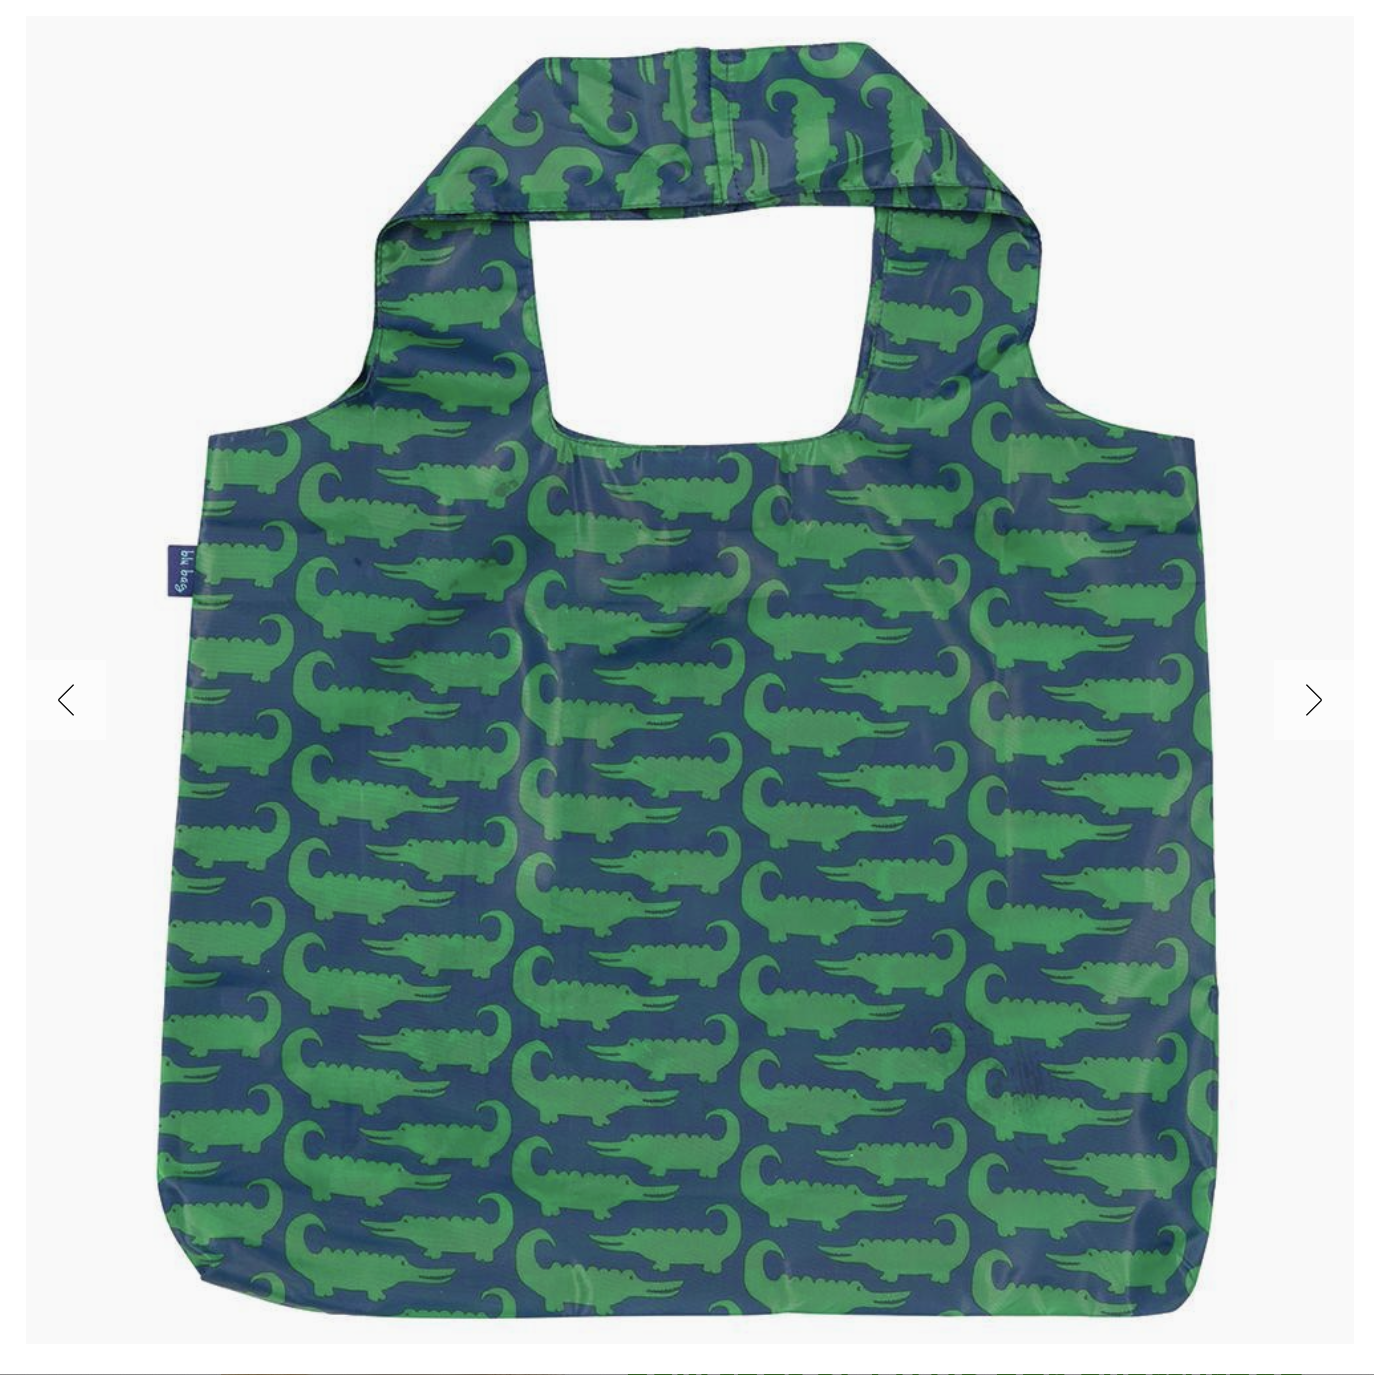 Reusable Shopping Bag - 19x24" Pocket Tote, Gator Design